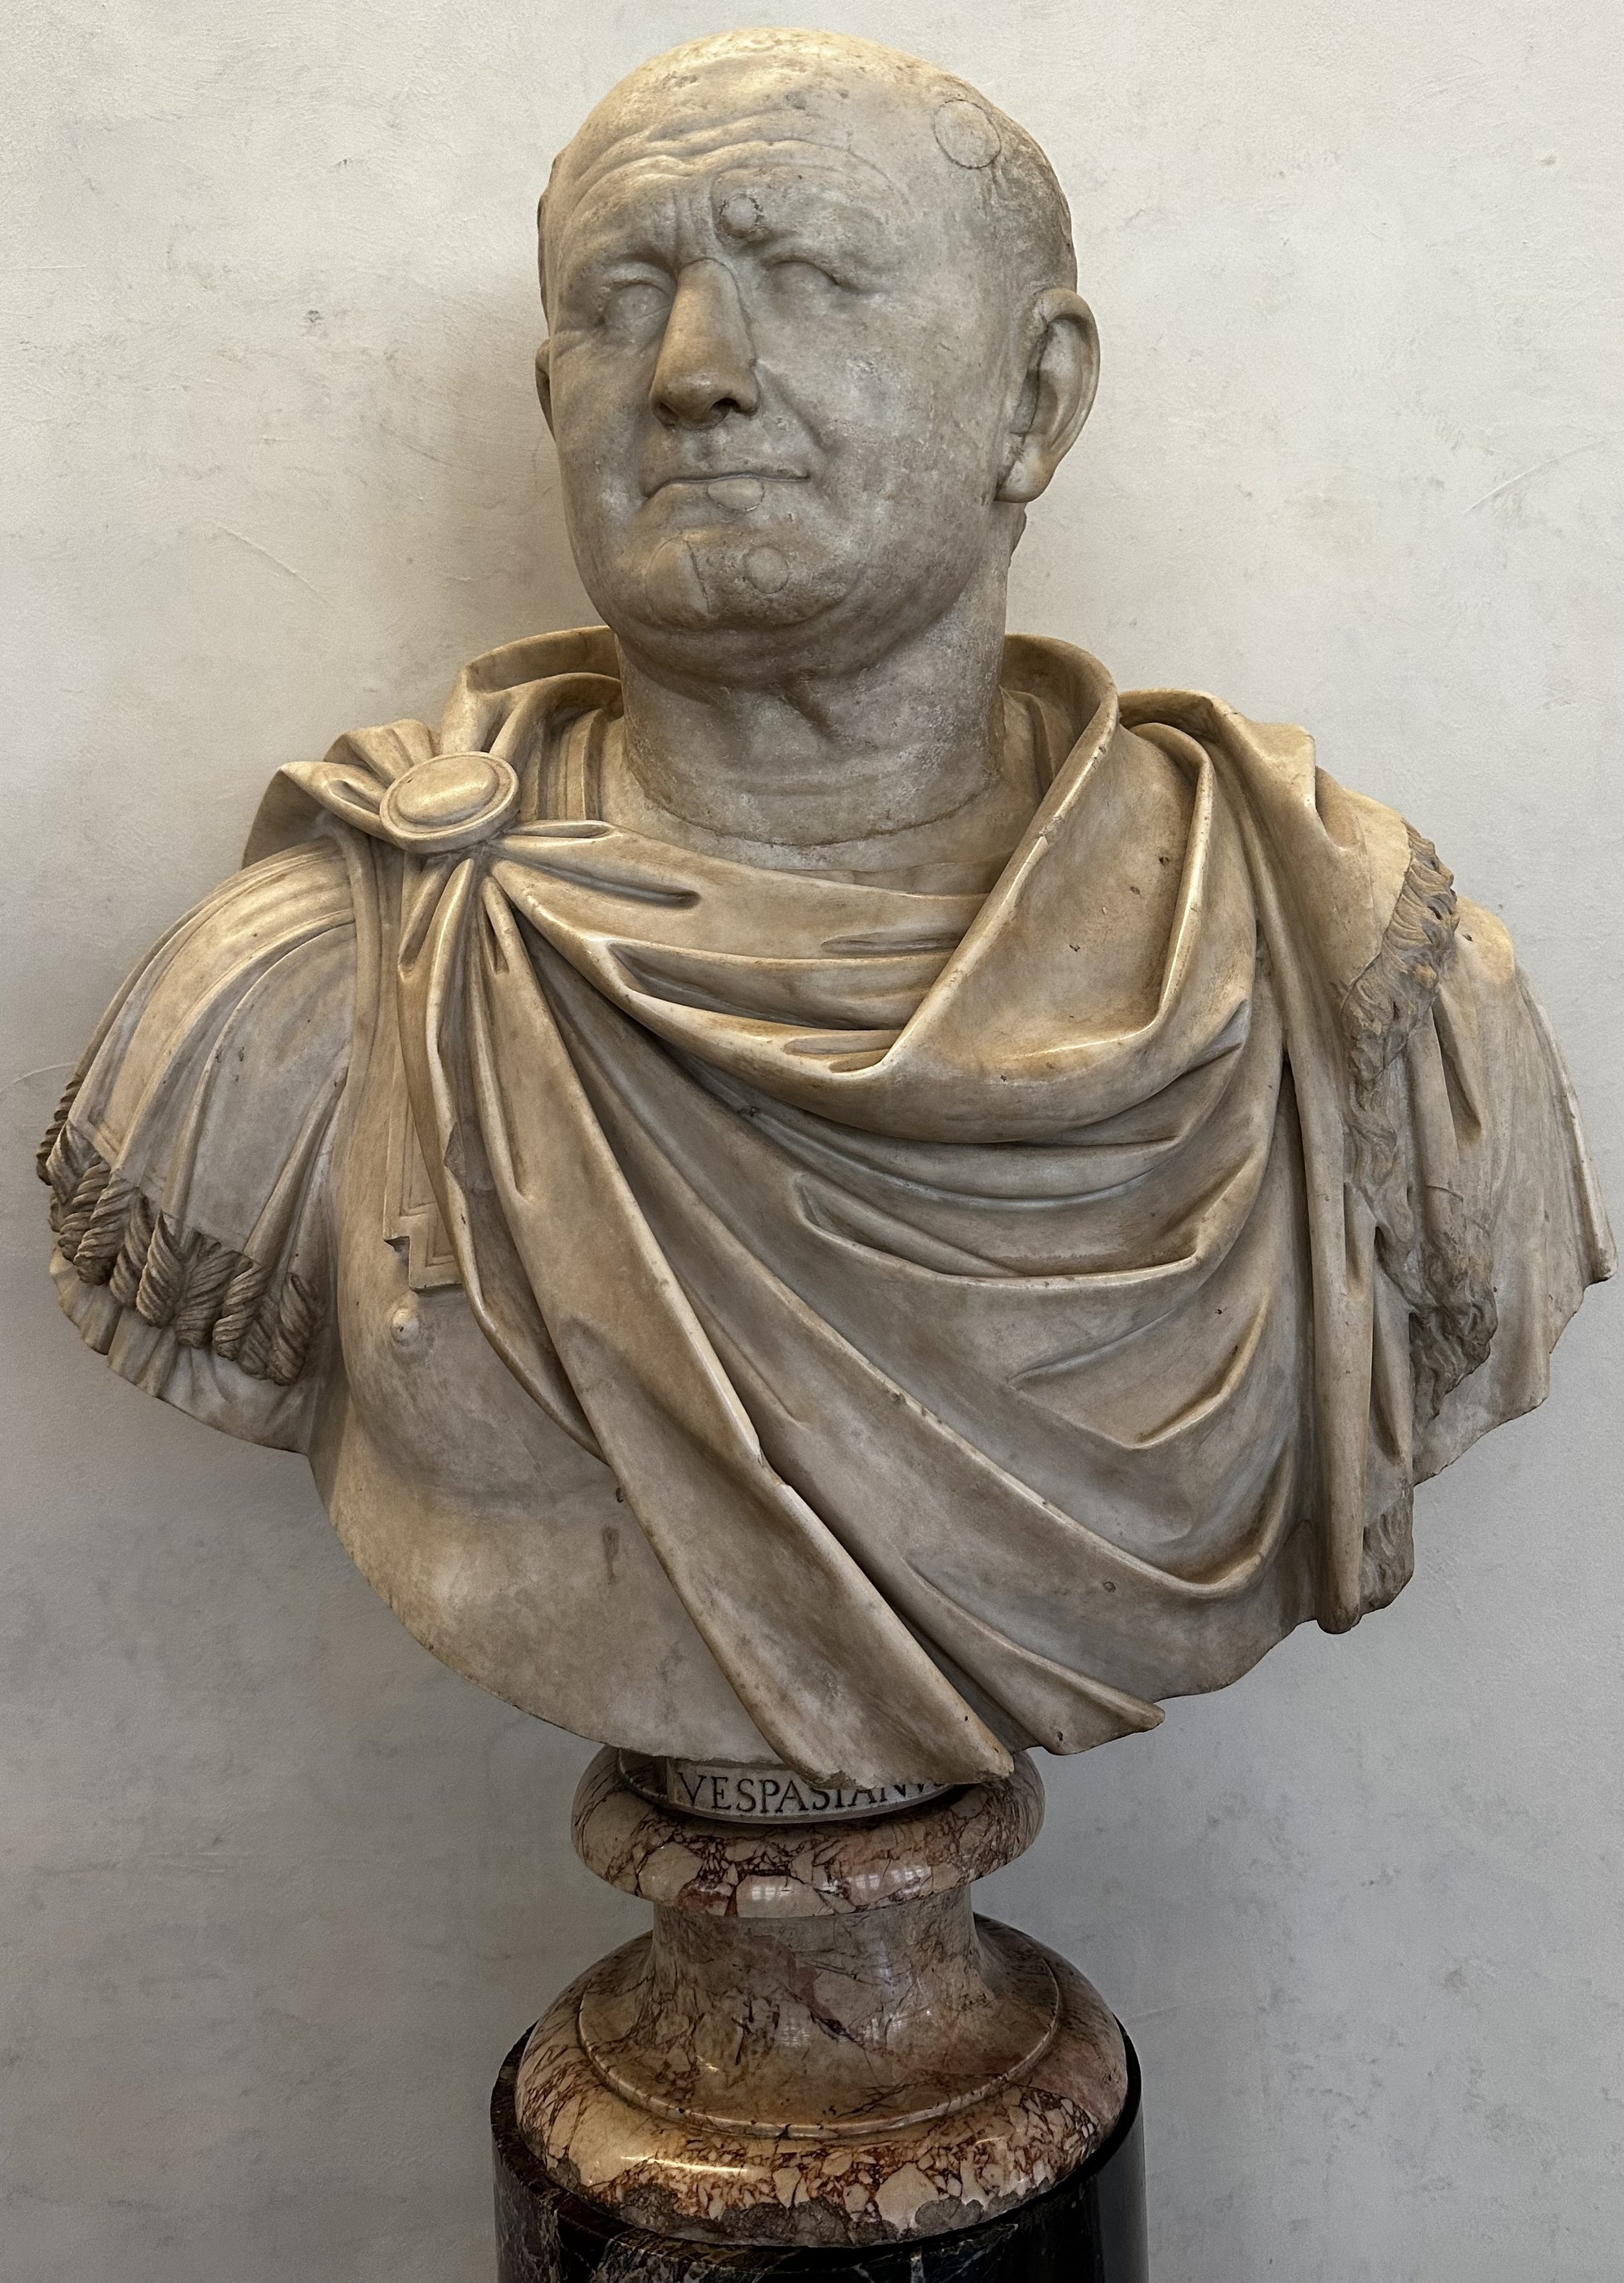 69-79 Bust of Roman Emperor Vespasian Uffizi Gallery.jpeg